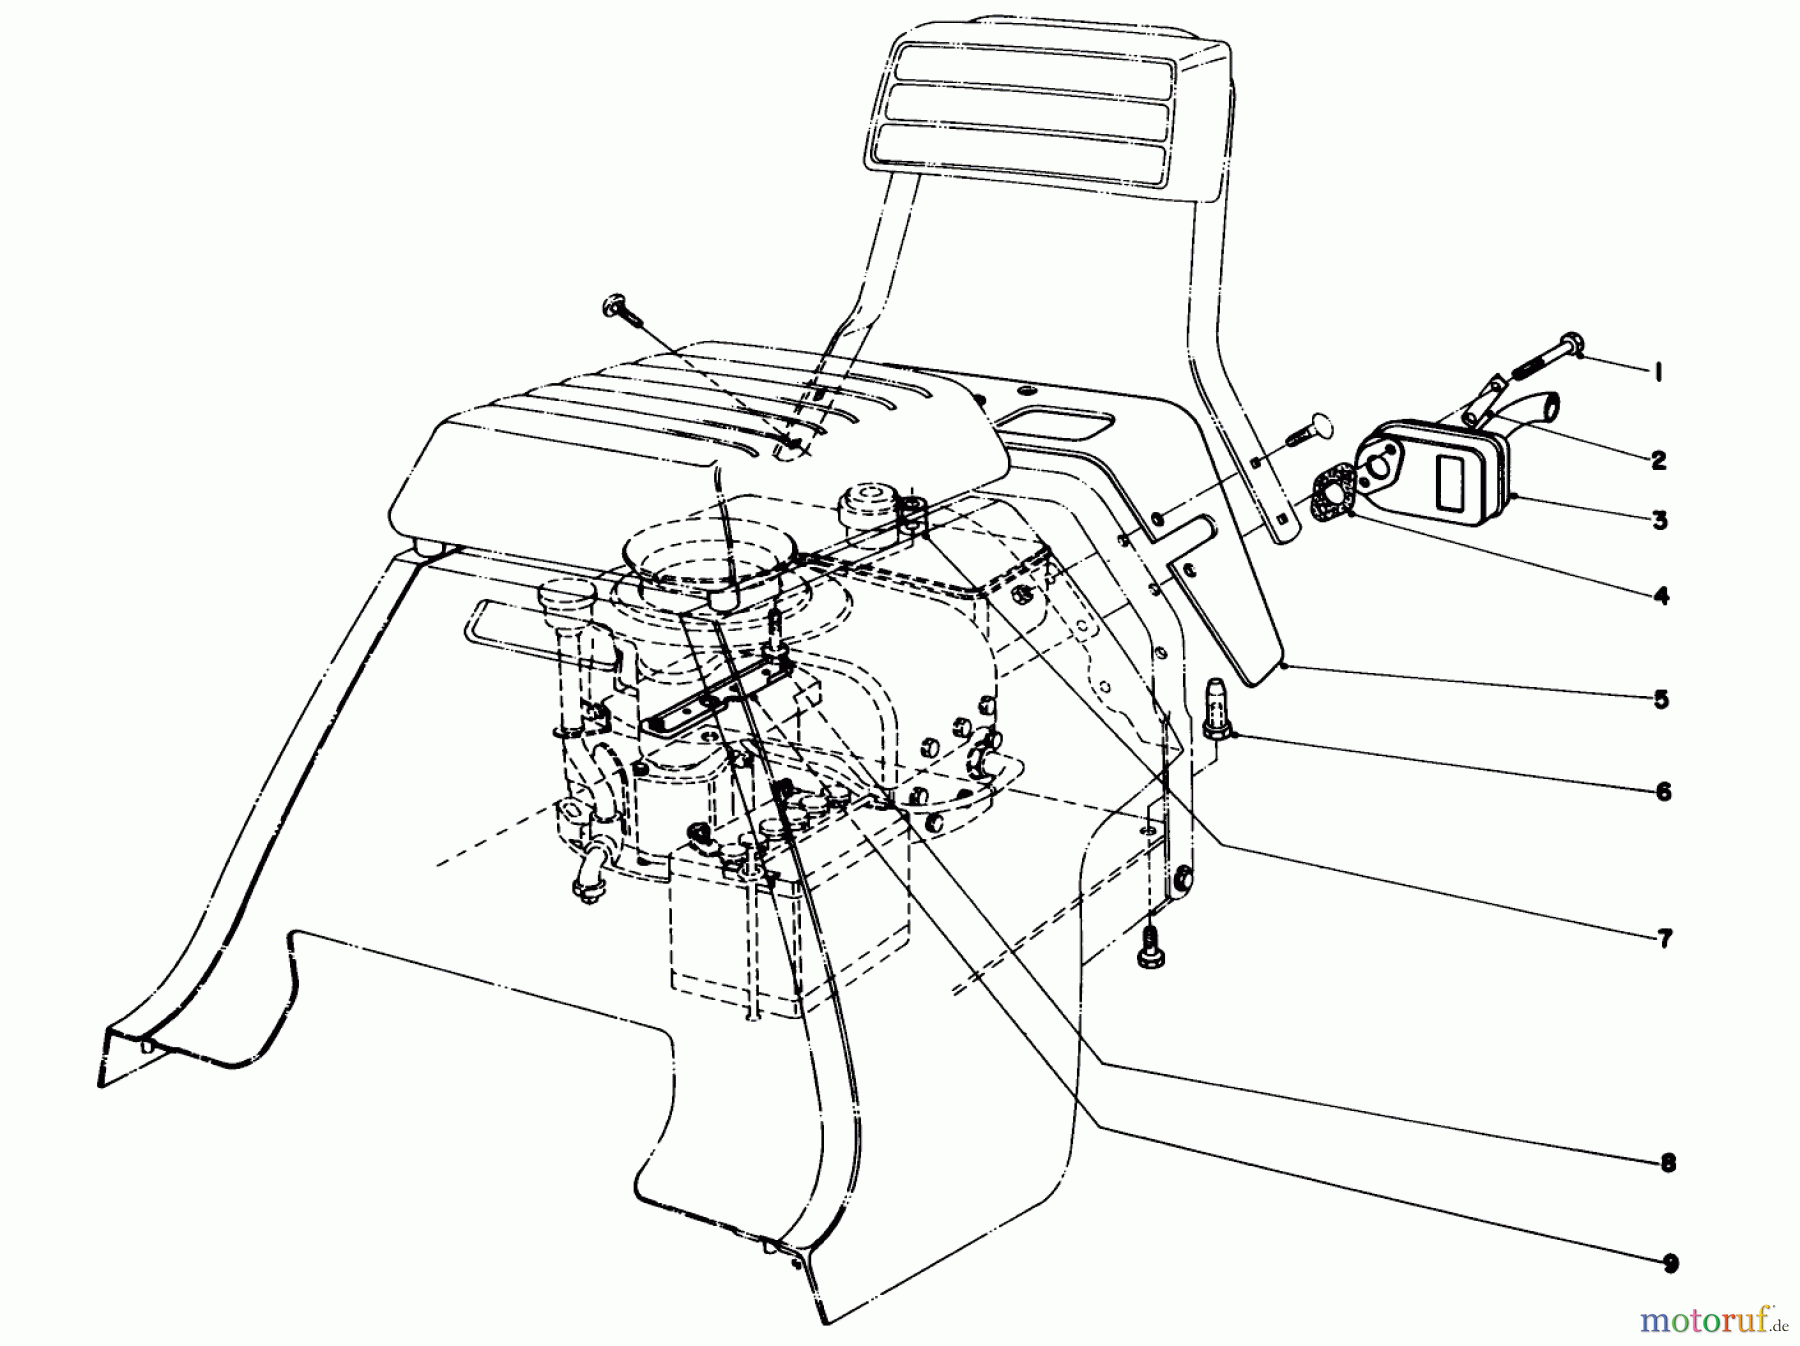  Toro Neu Accessories, Mower 25-3060 - Toro Retrofit Kit, 7 hp Rear Engine Rider RETRO FIT AUX. KIT 7 H.P. PREMIUM RIDERS